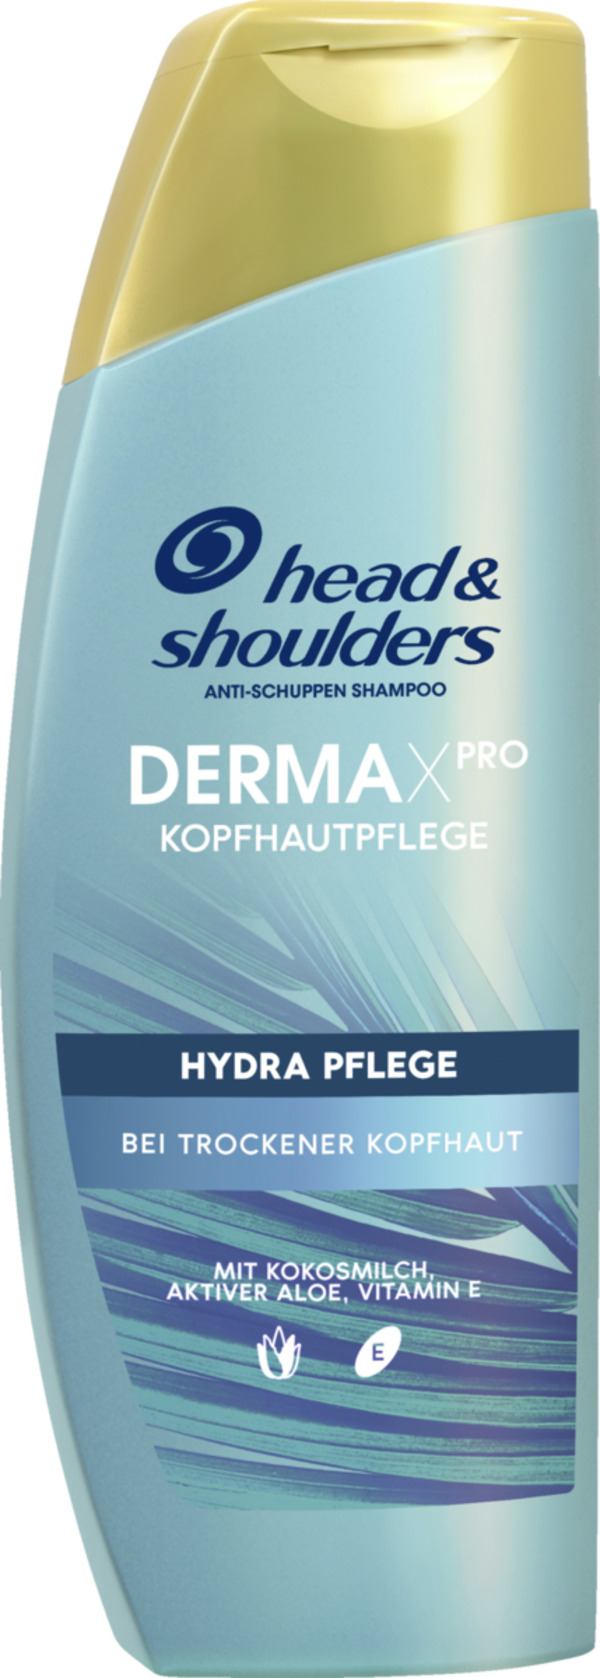 Bild 1 von head & shoulders DERMAXPRO Hydra Pflege Anti-Schuppen Shampoo